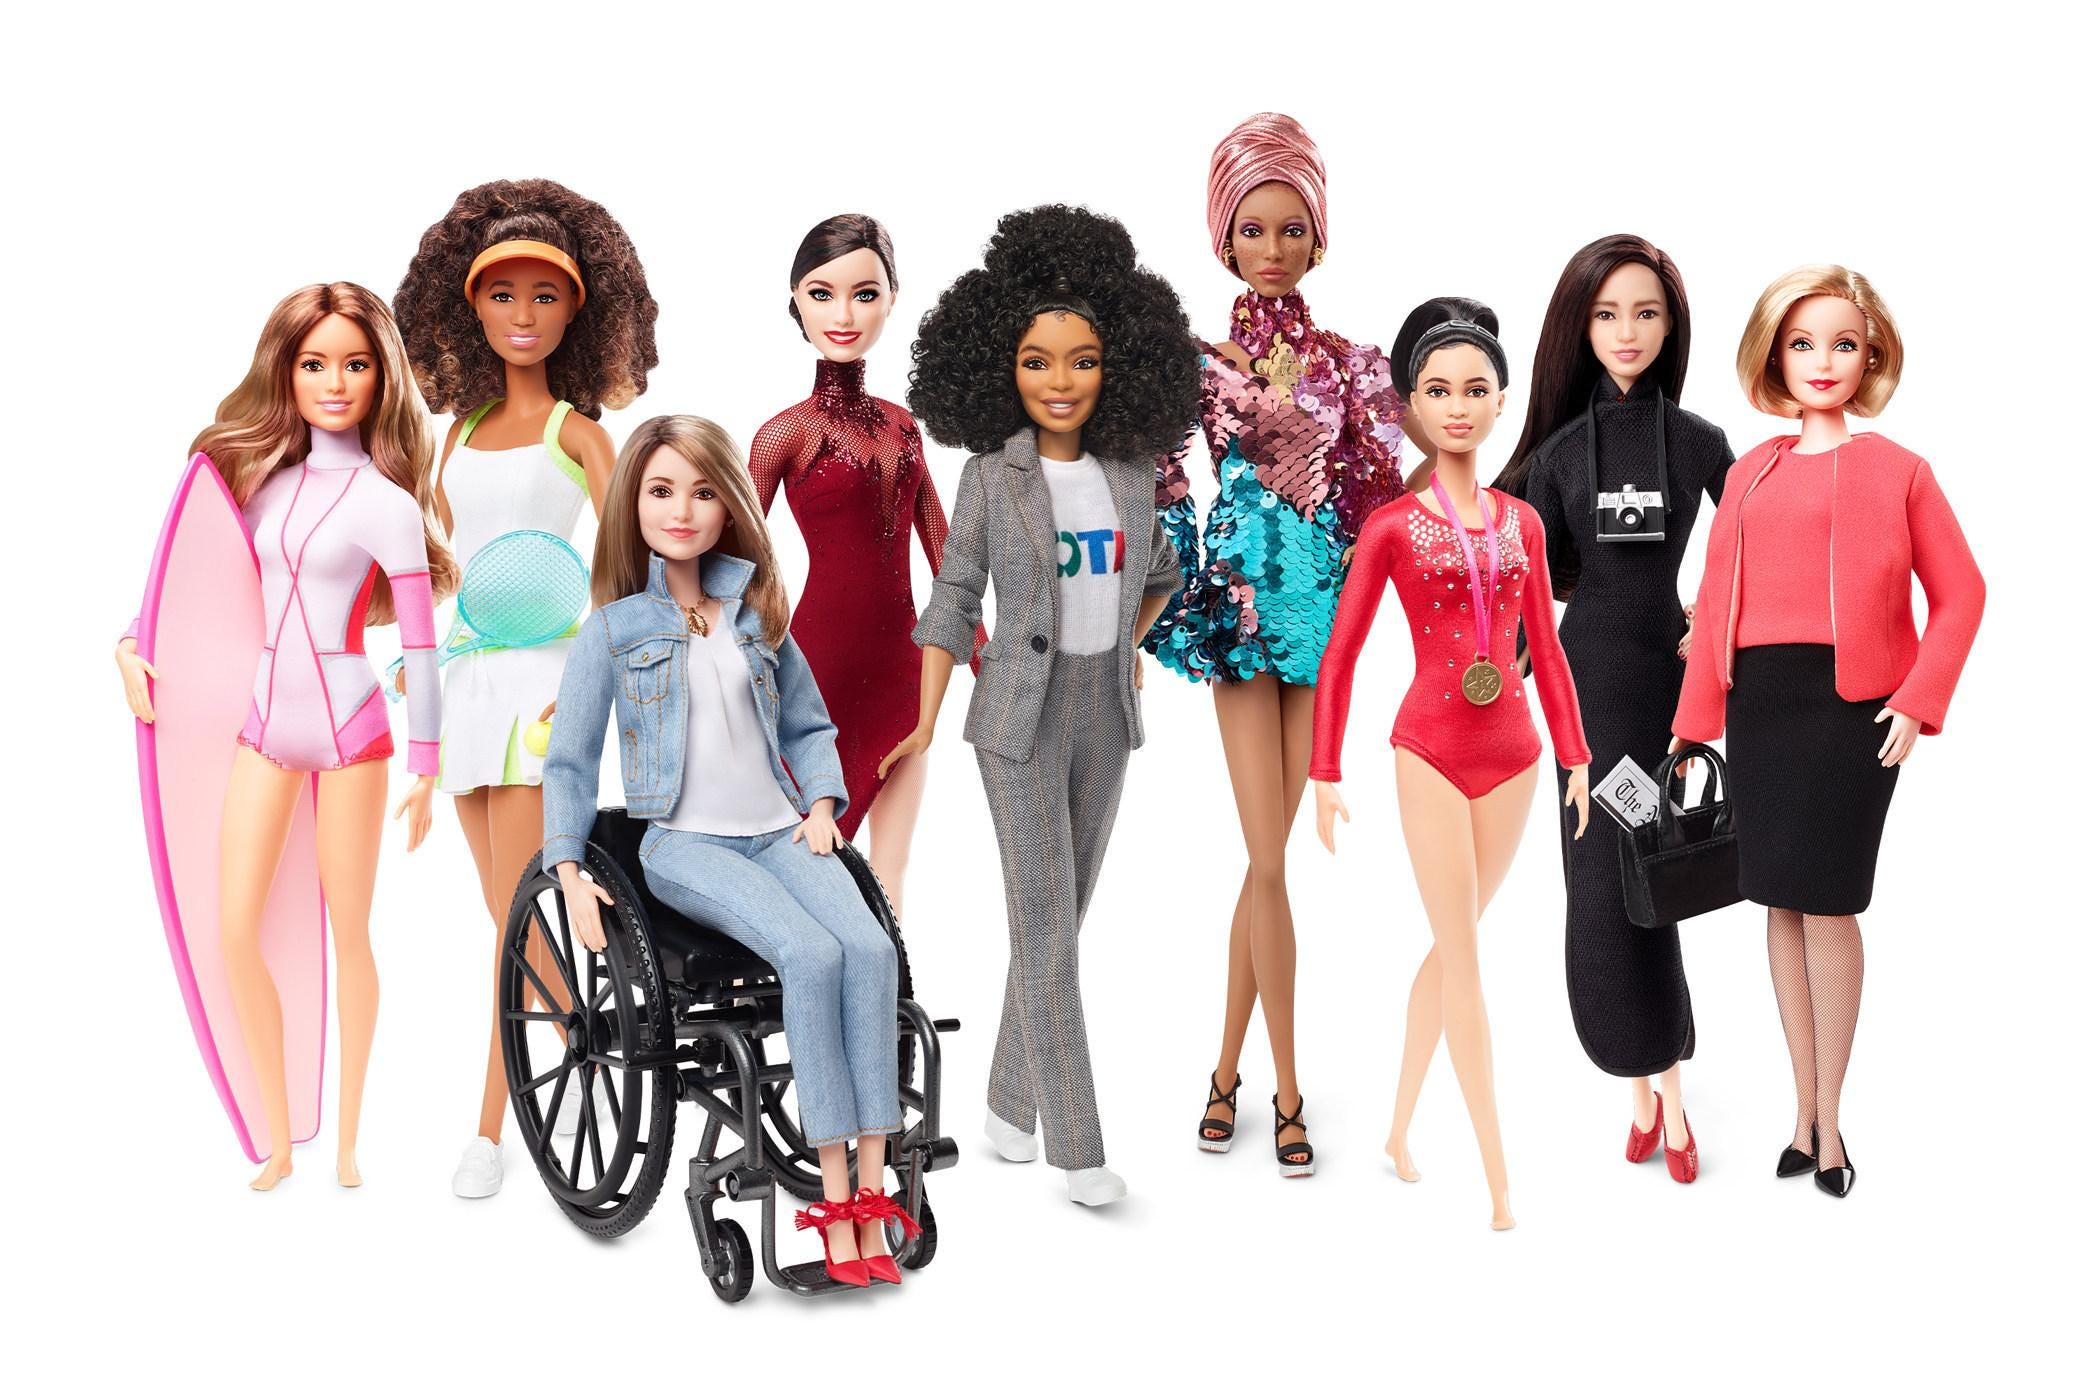 barbie videos with lol dolls